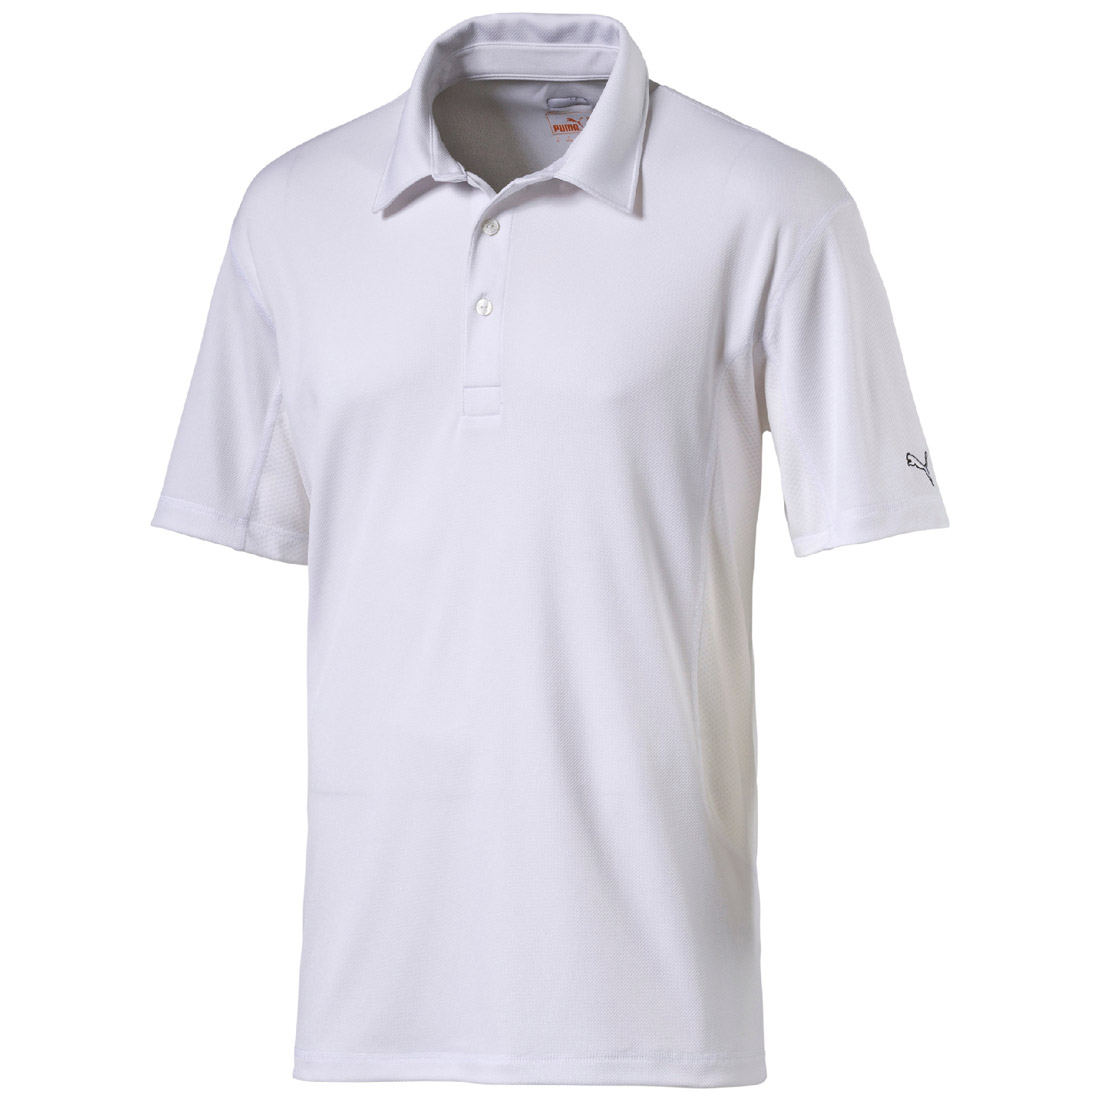 Puma Golf Tech Polo Cresting Shirt Climalite Herren weiß